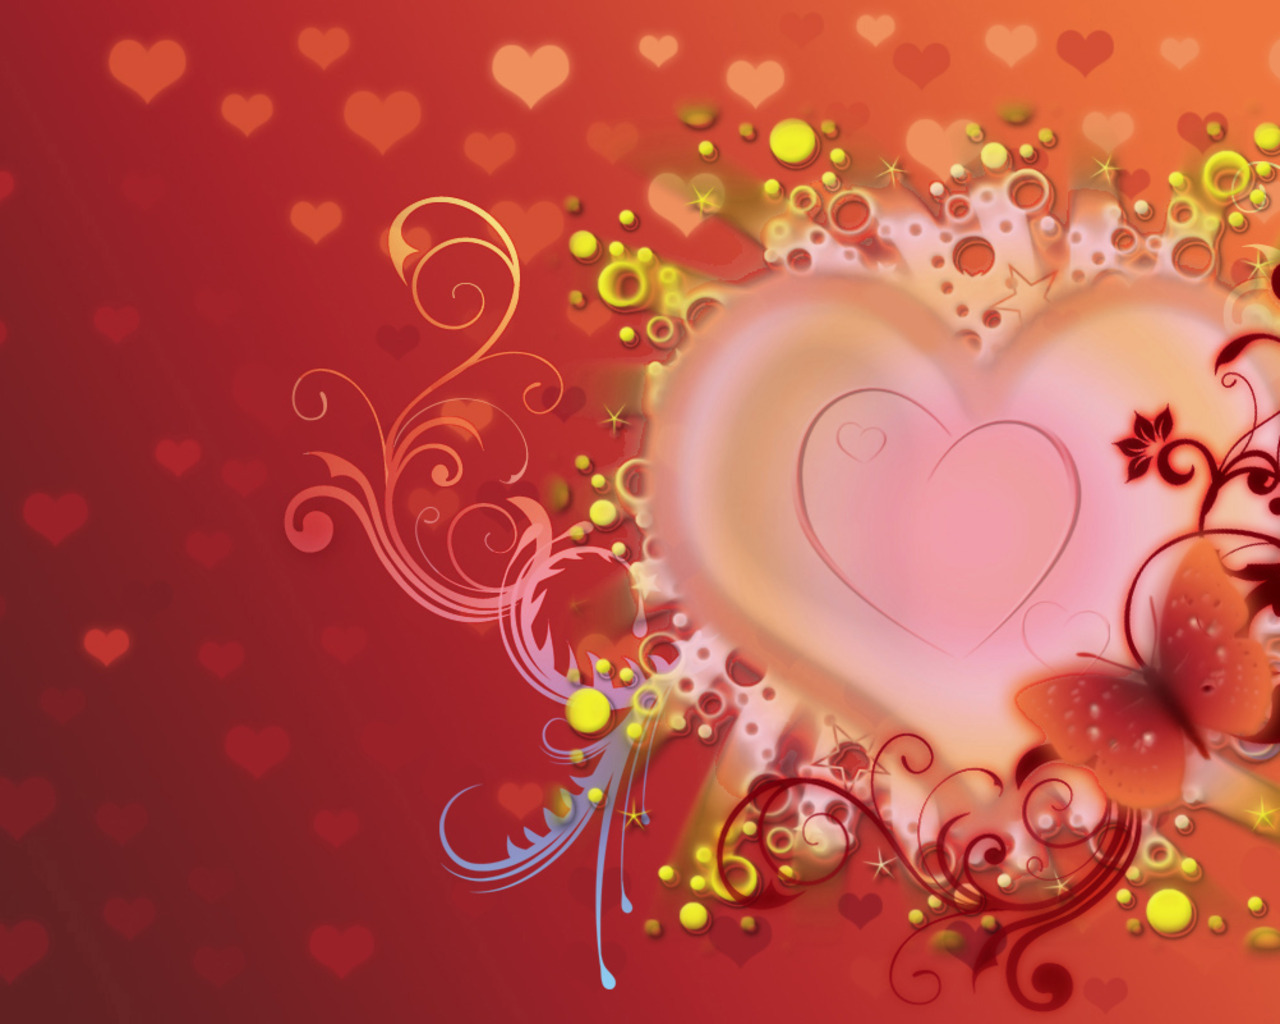 Share With Friends Valentine Desktop Wallpaper Which Is